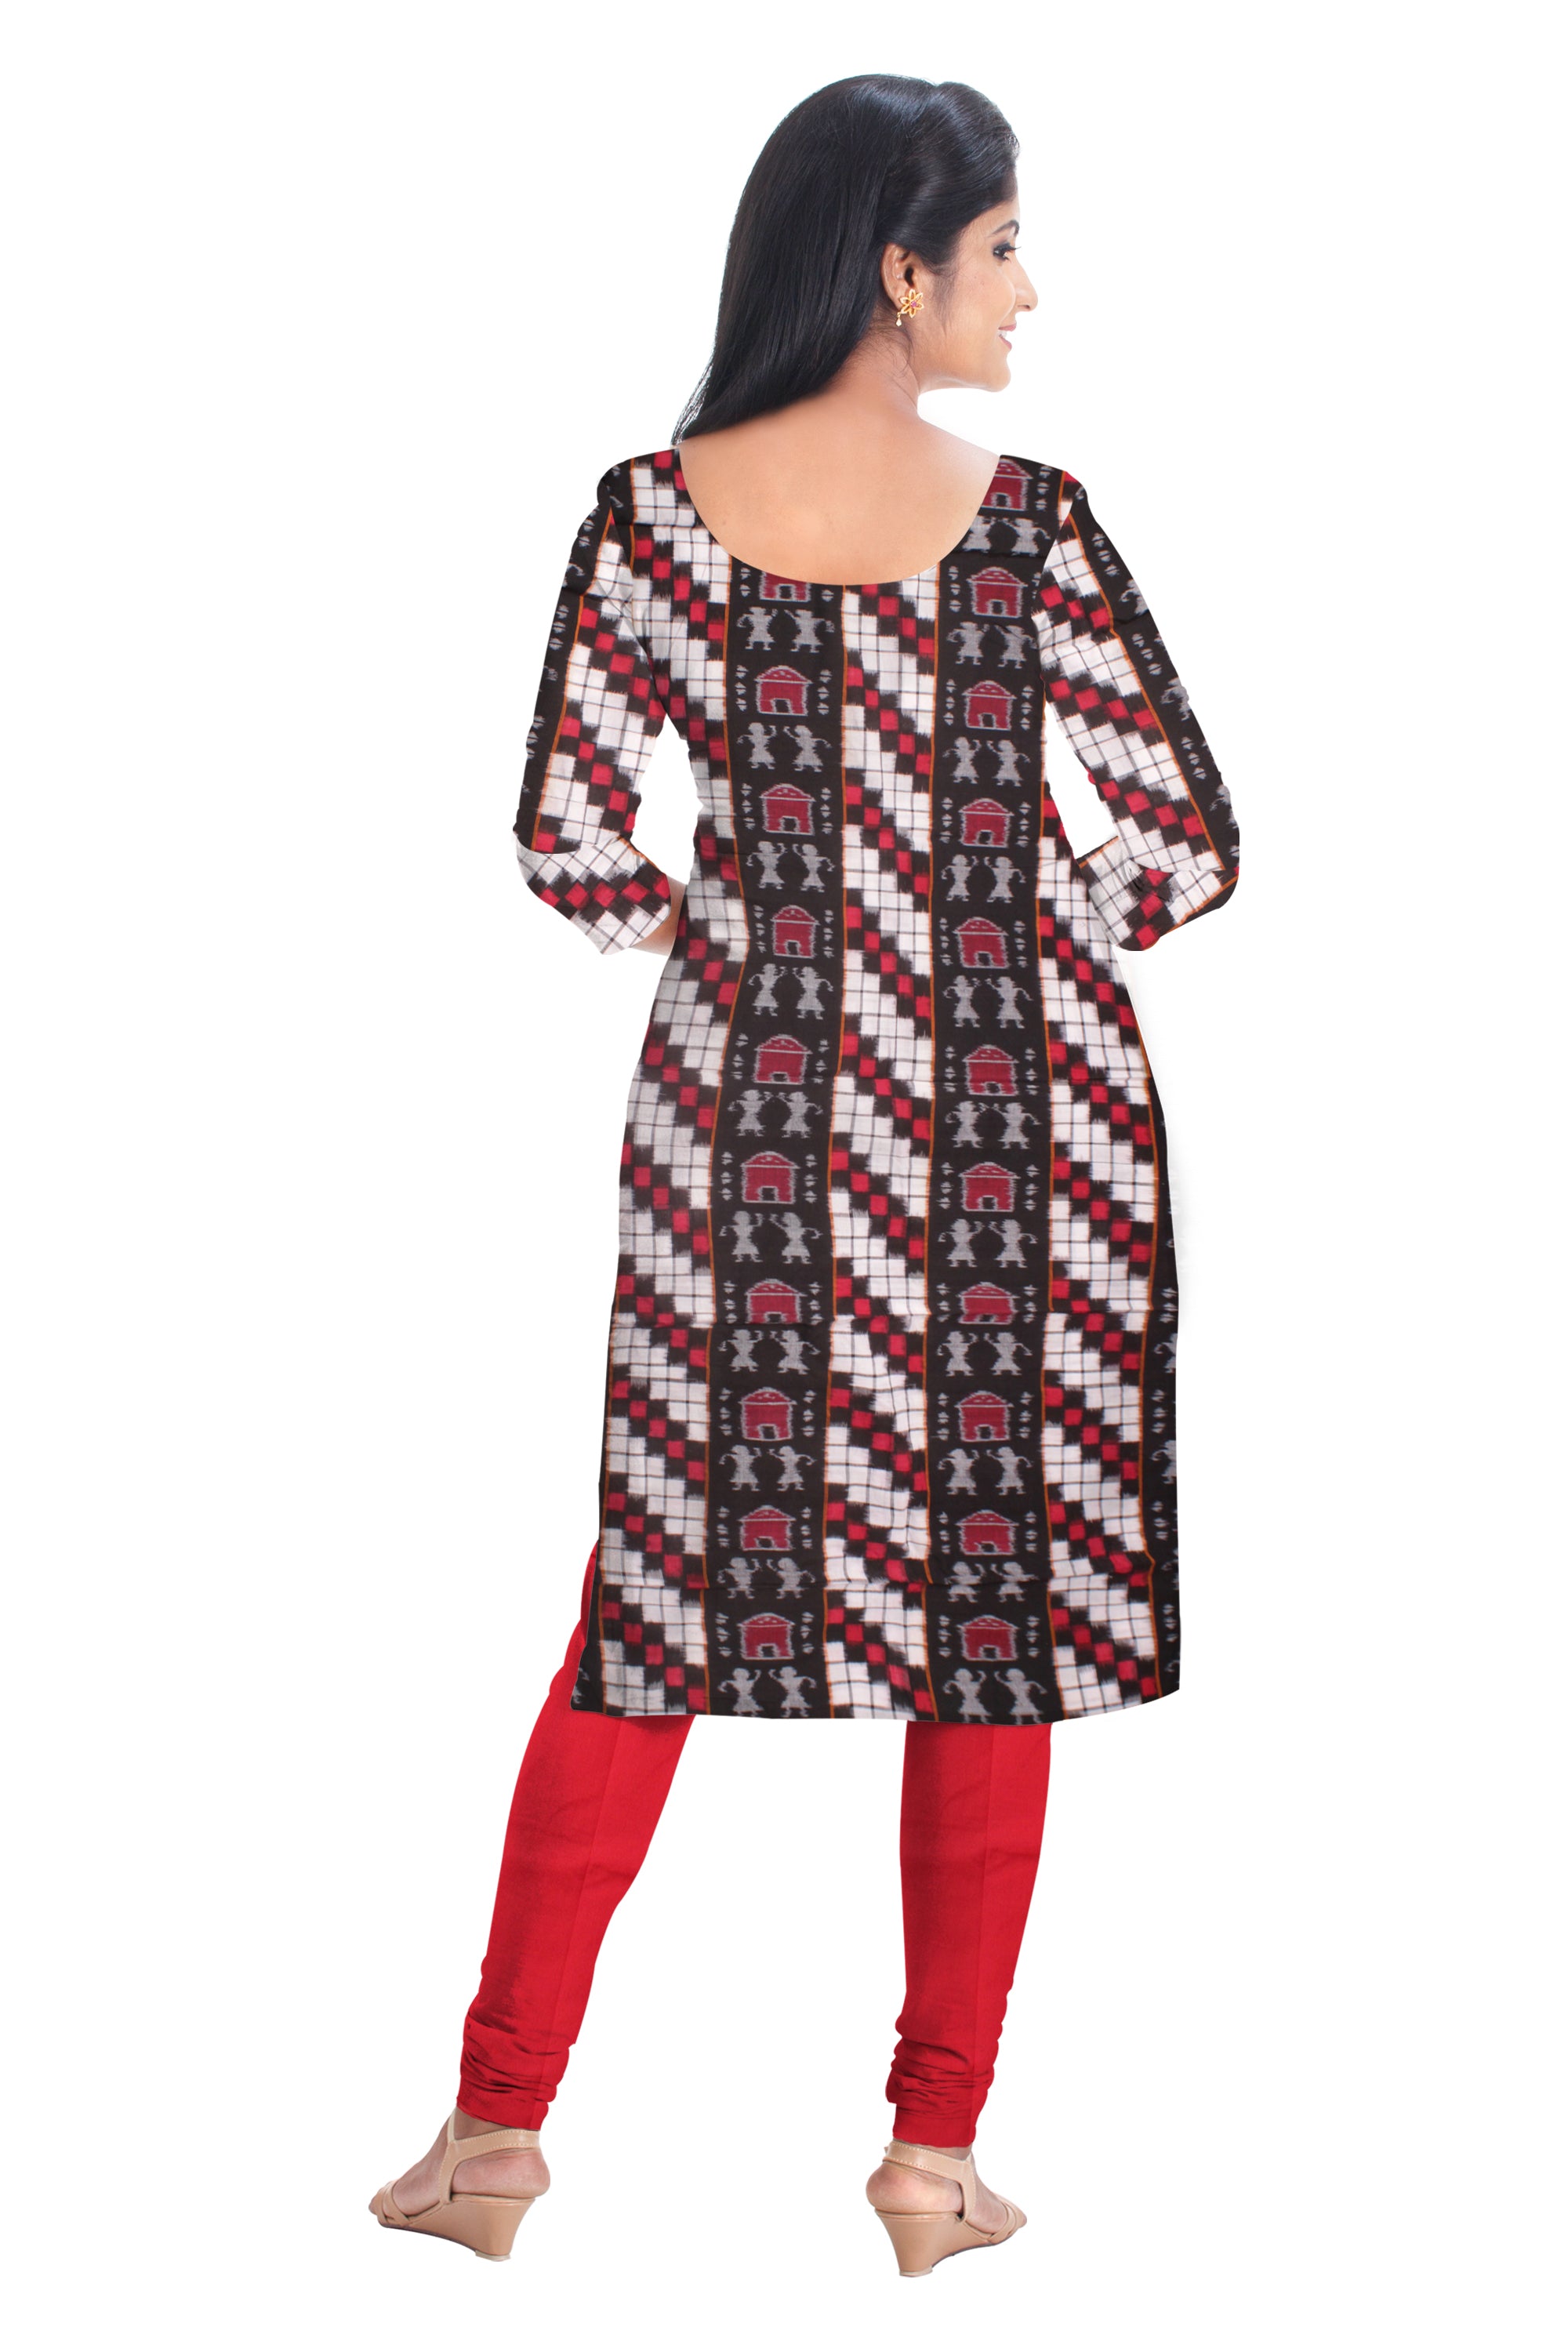 Net Dress Material - Buy Net Dress Material online in India